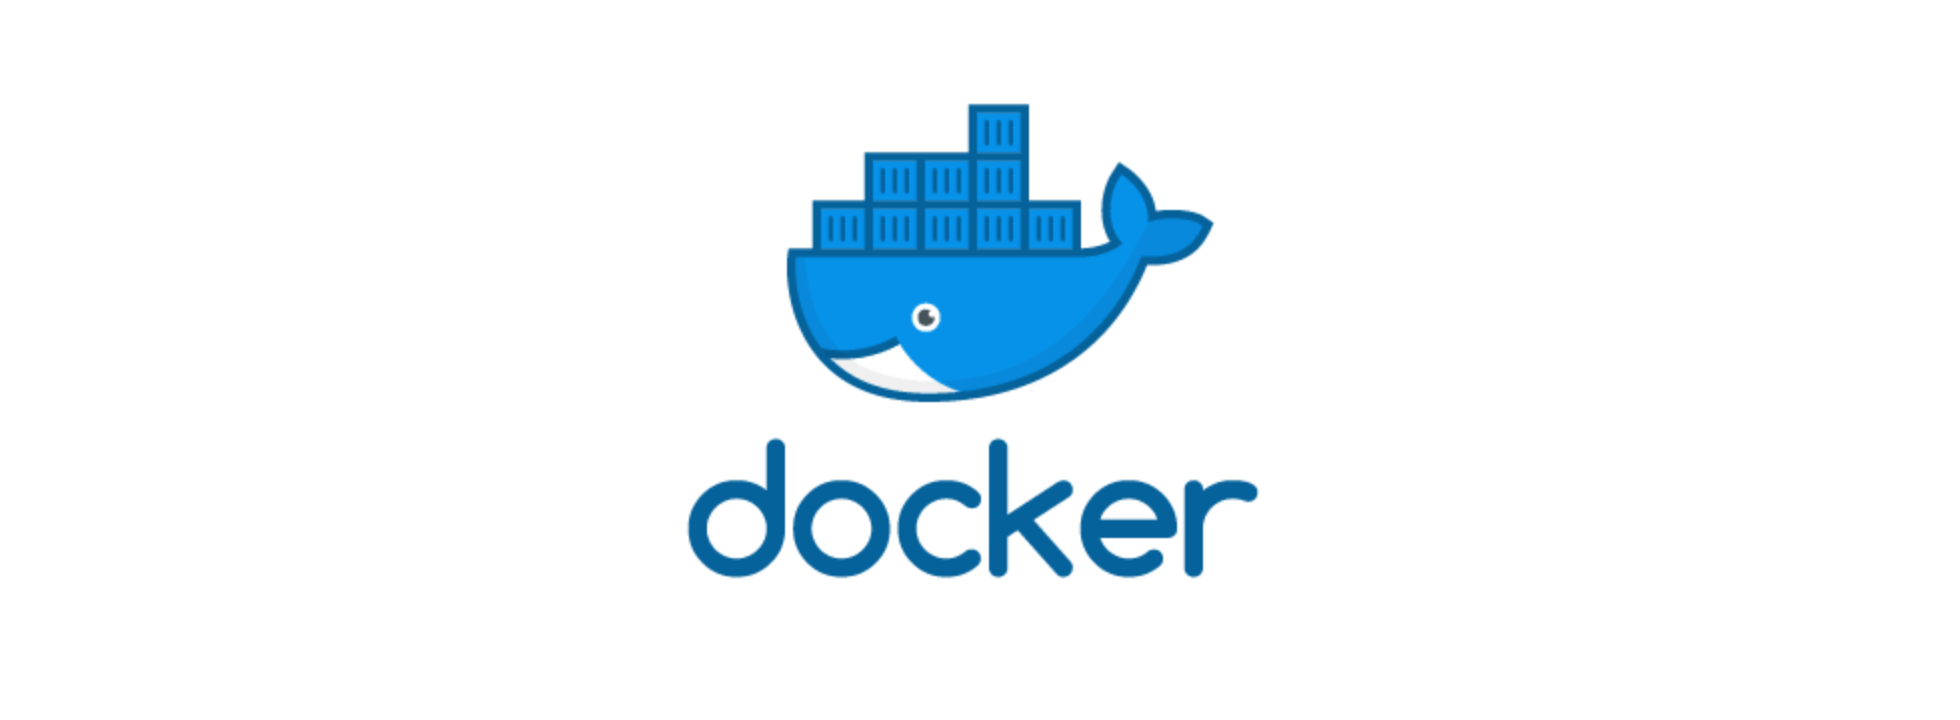 Docker exec. Docker шрифт. Docker символ. Docker без фона. Docker exec user